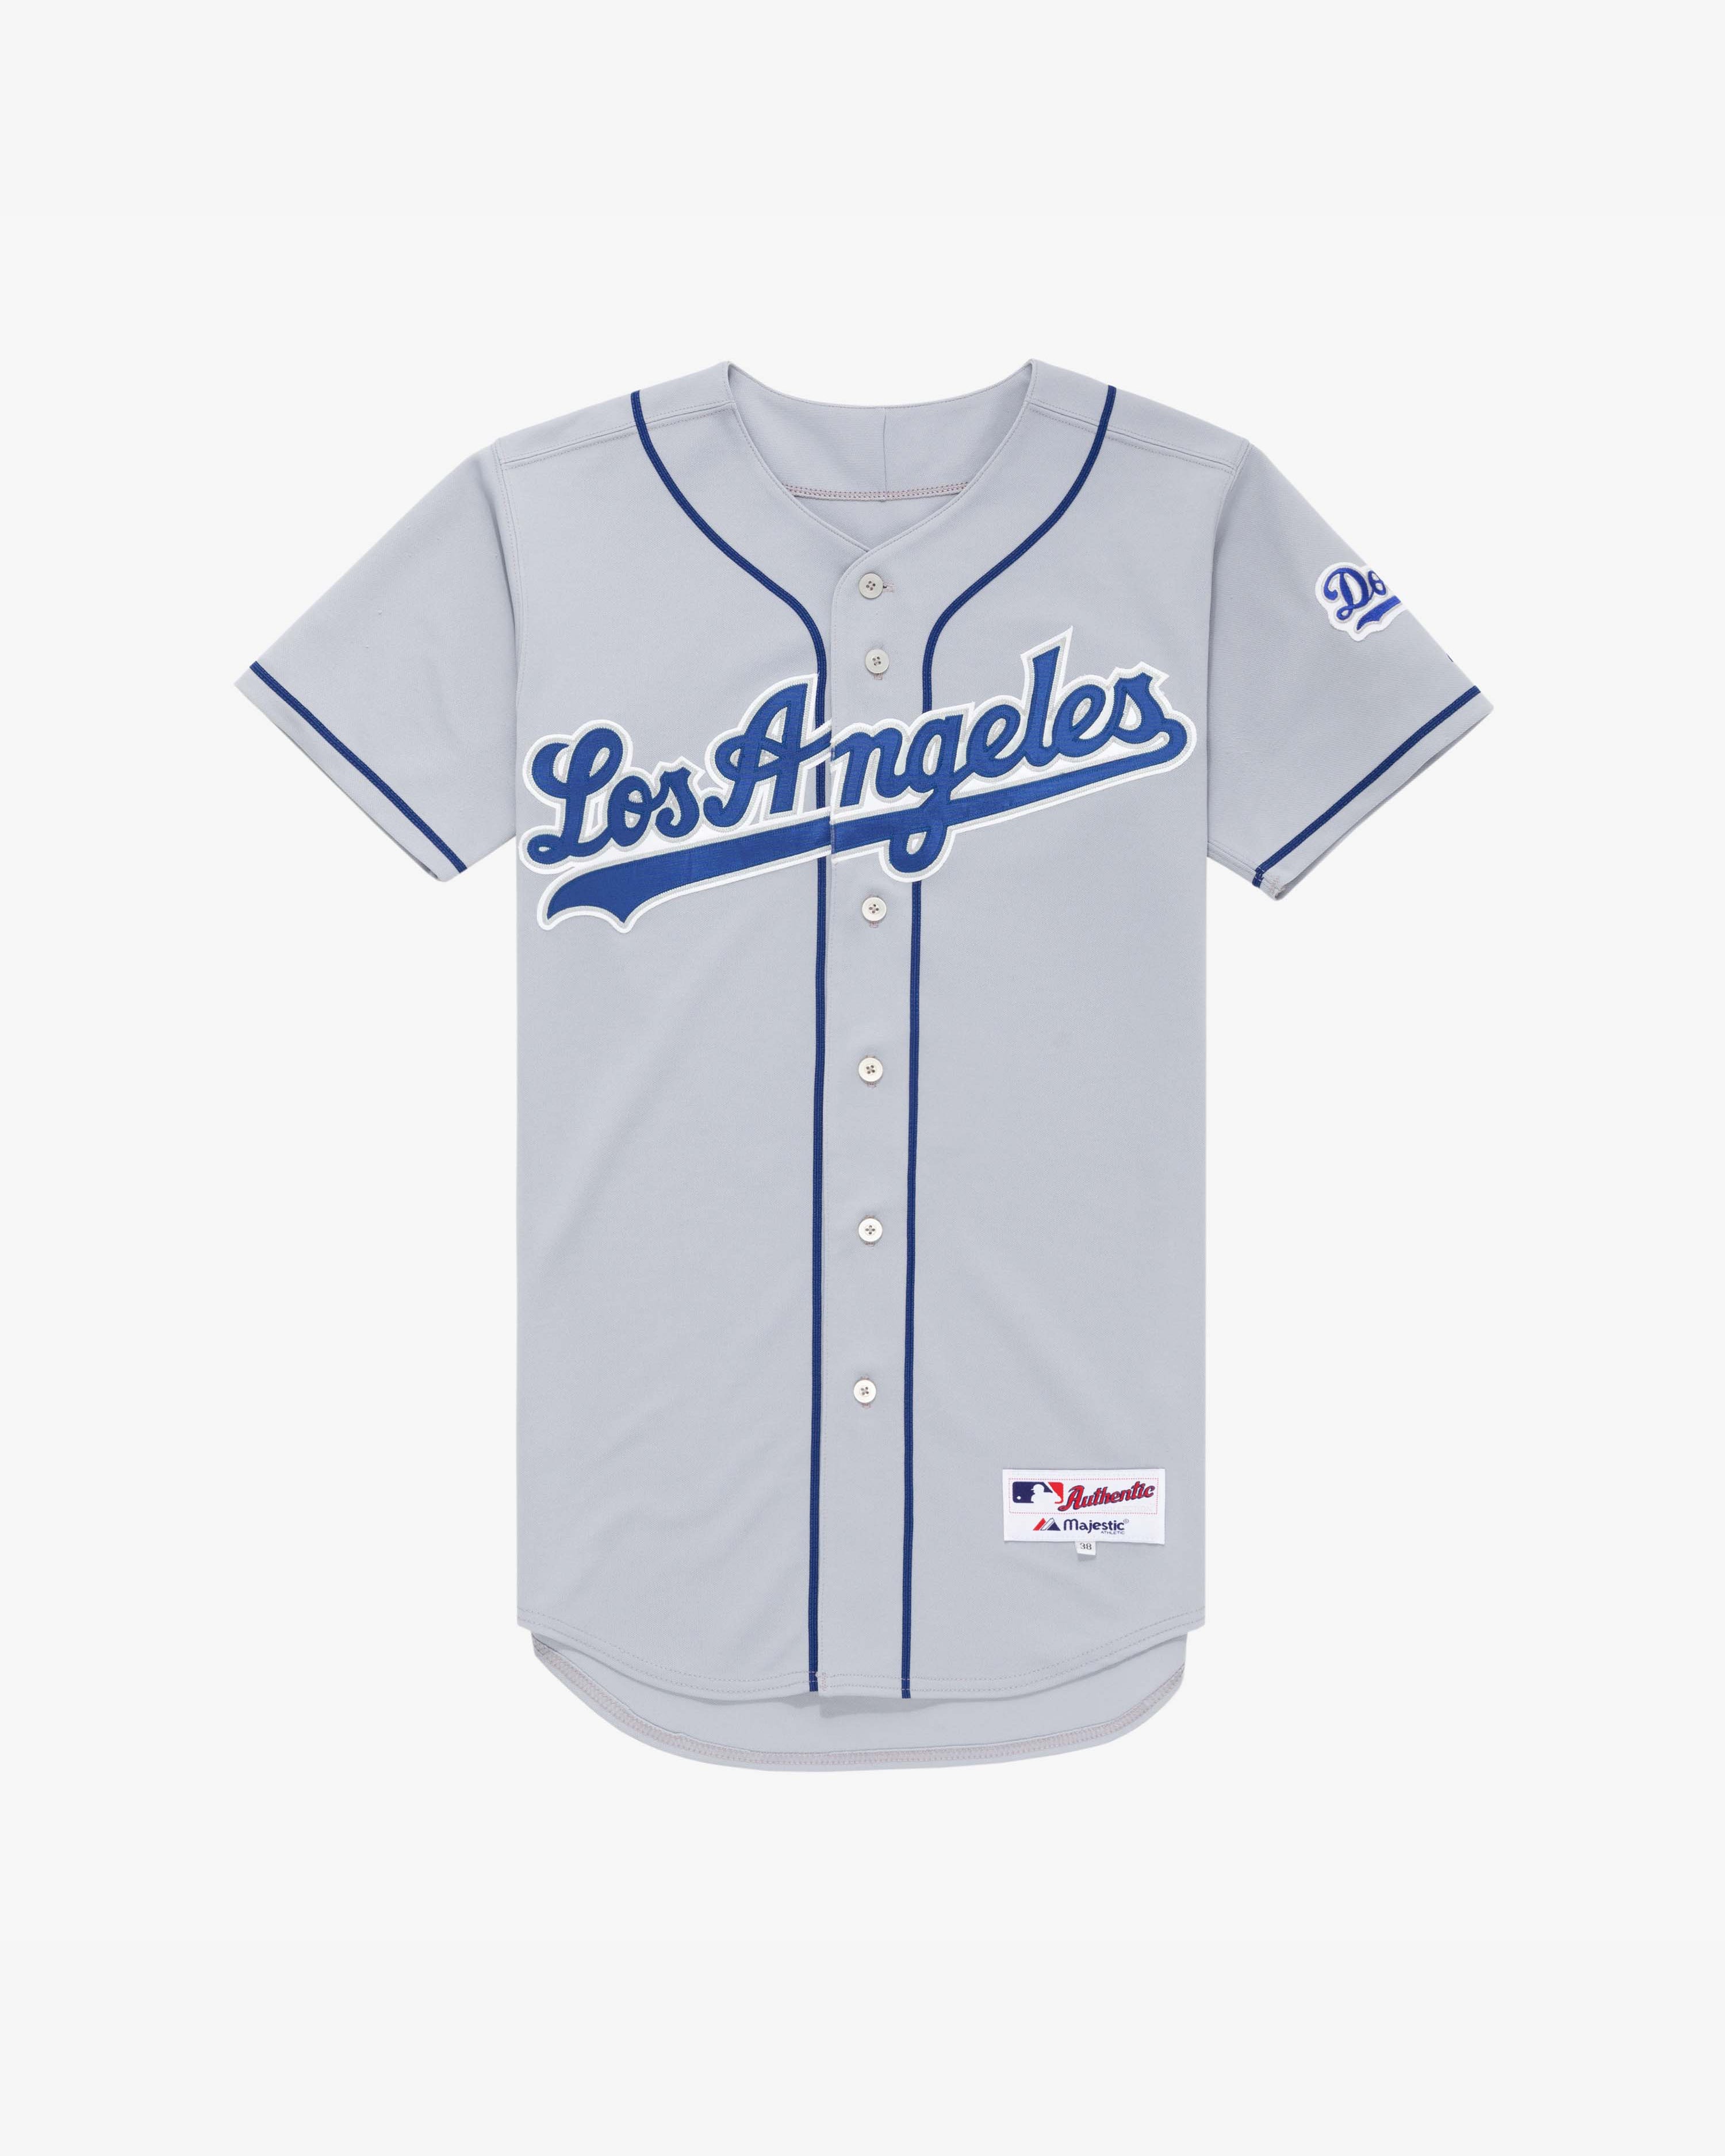 Authentic Los Angeles Dodgers Jerseys, Throwback Los Angeles Dodgers Jerseys  & Clearance Los Angeles Dodgers Jerseys